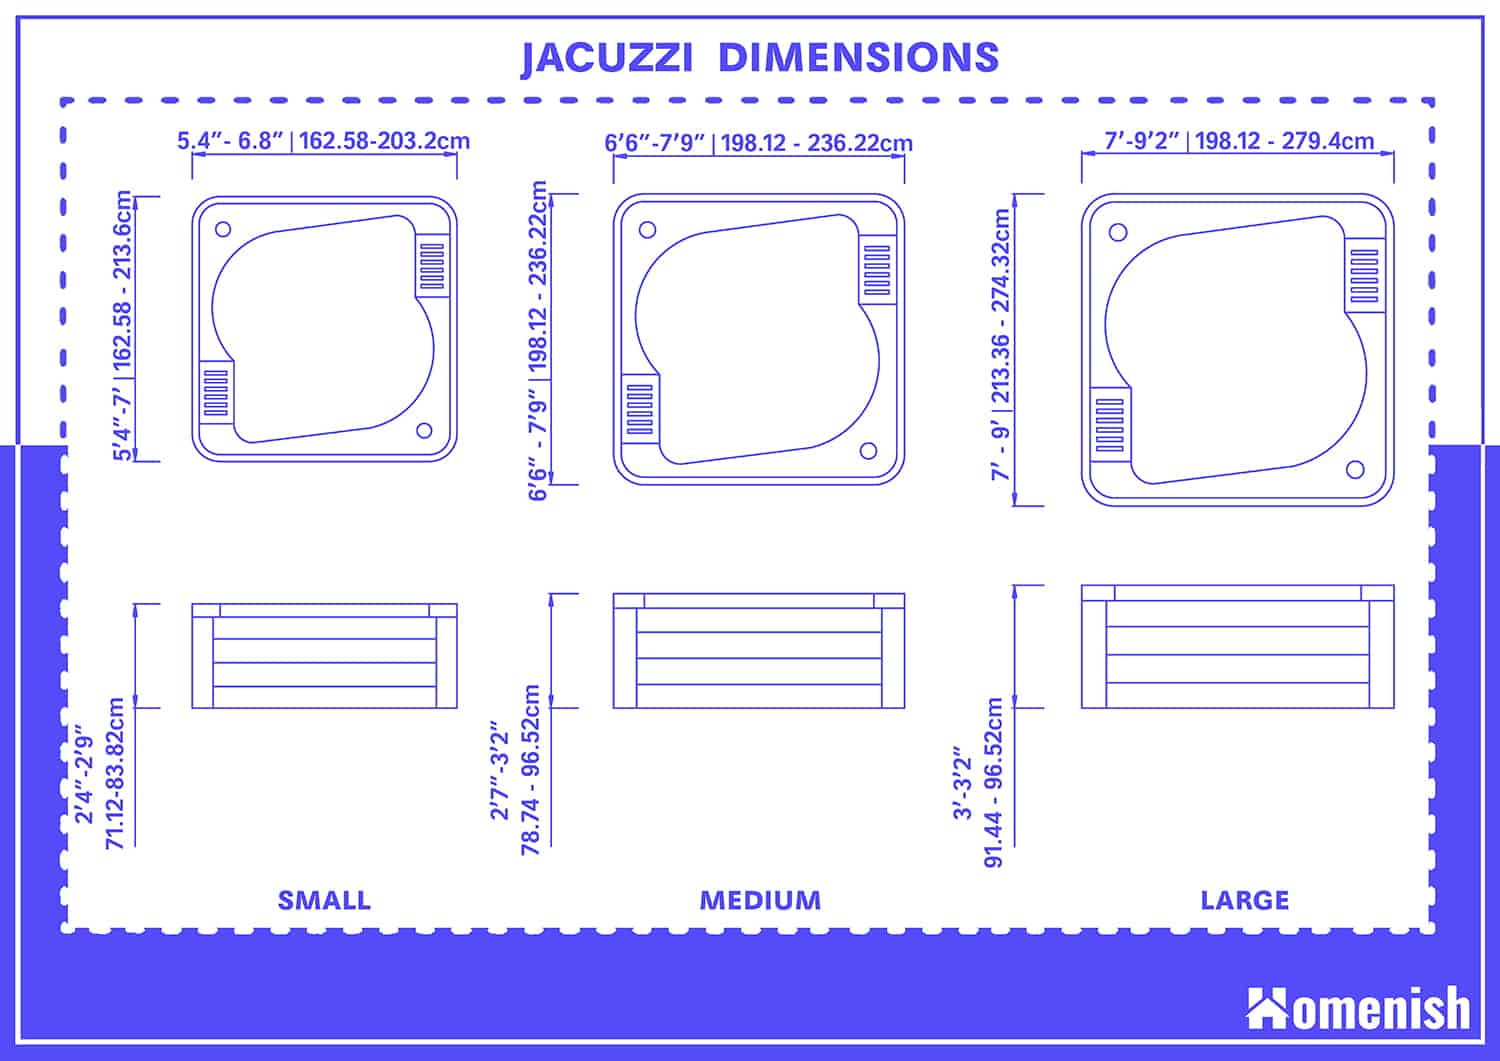 Jacuzzi Dimensions